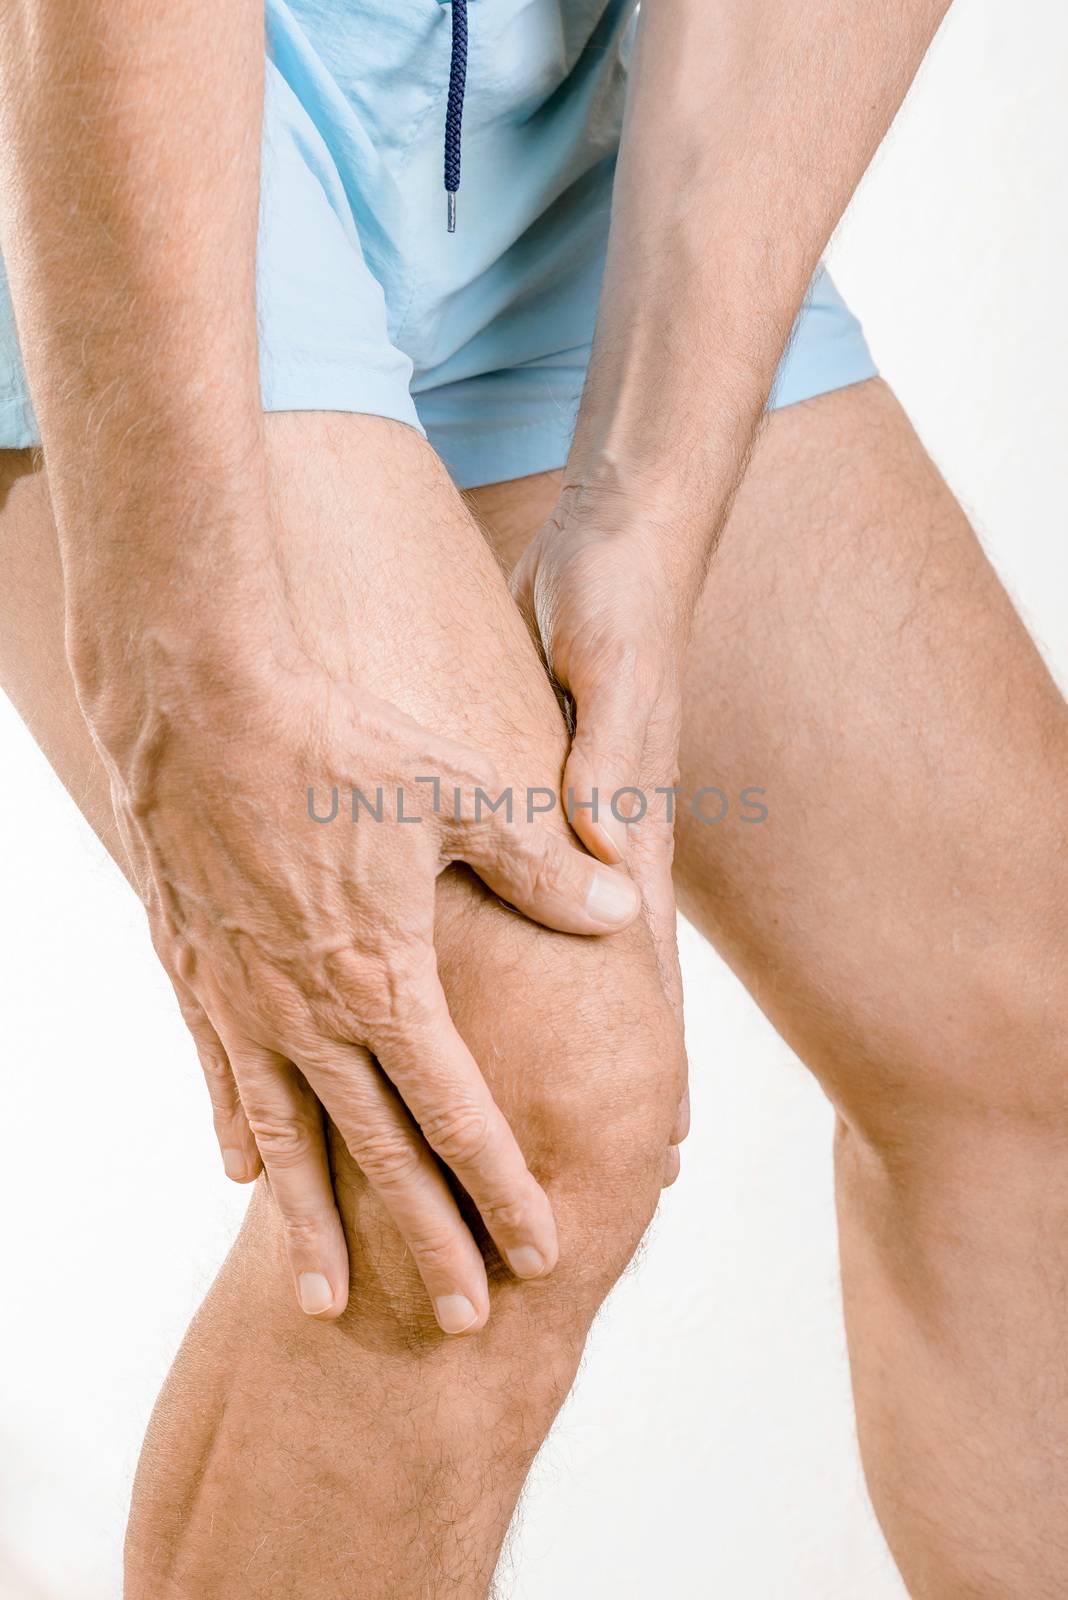 Athlete man feeling pain to the knee by MaxalTamor